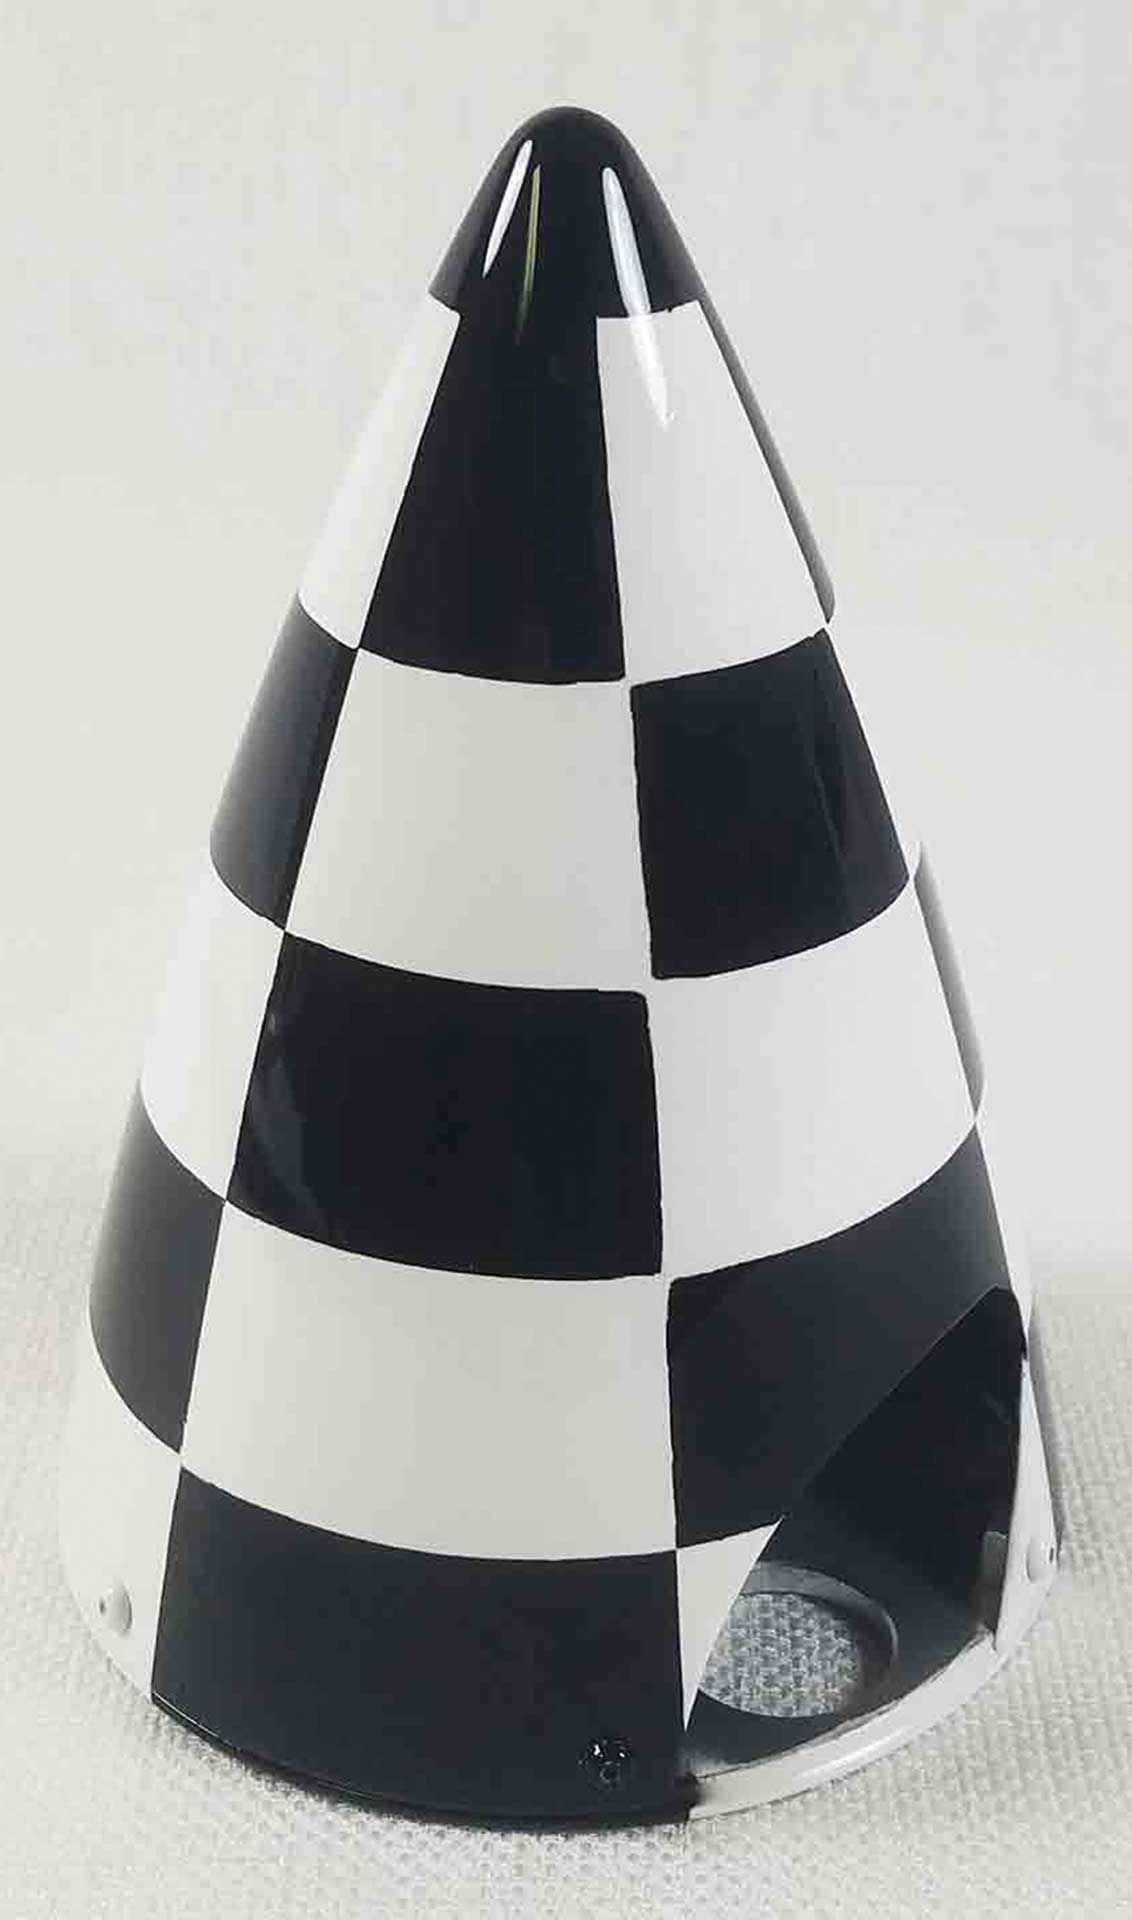 EXTREMEFLIGHT-RC Spinner Carbon 5" (127mm) noir/blanc Motif à damier